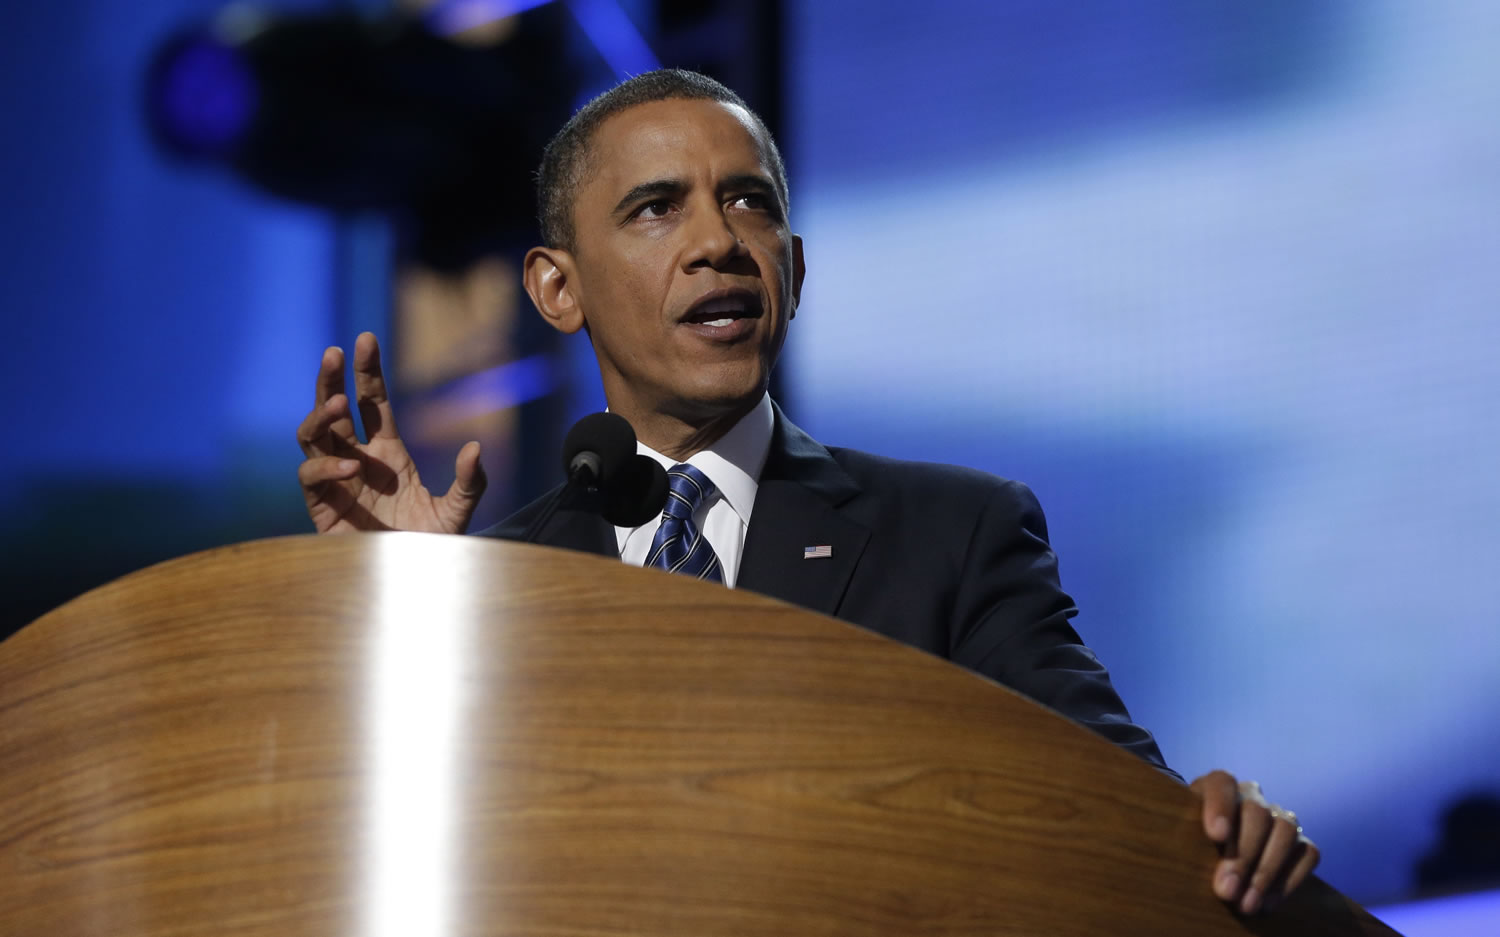 President Barack Obama addresses the Democratic National Convention in Charlotte, N.C., on Thursday, Sept. 6, 2012.